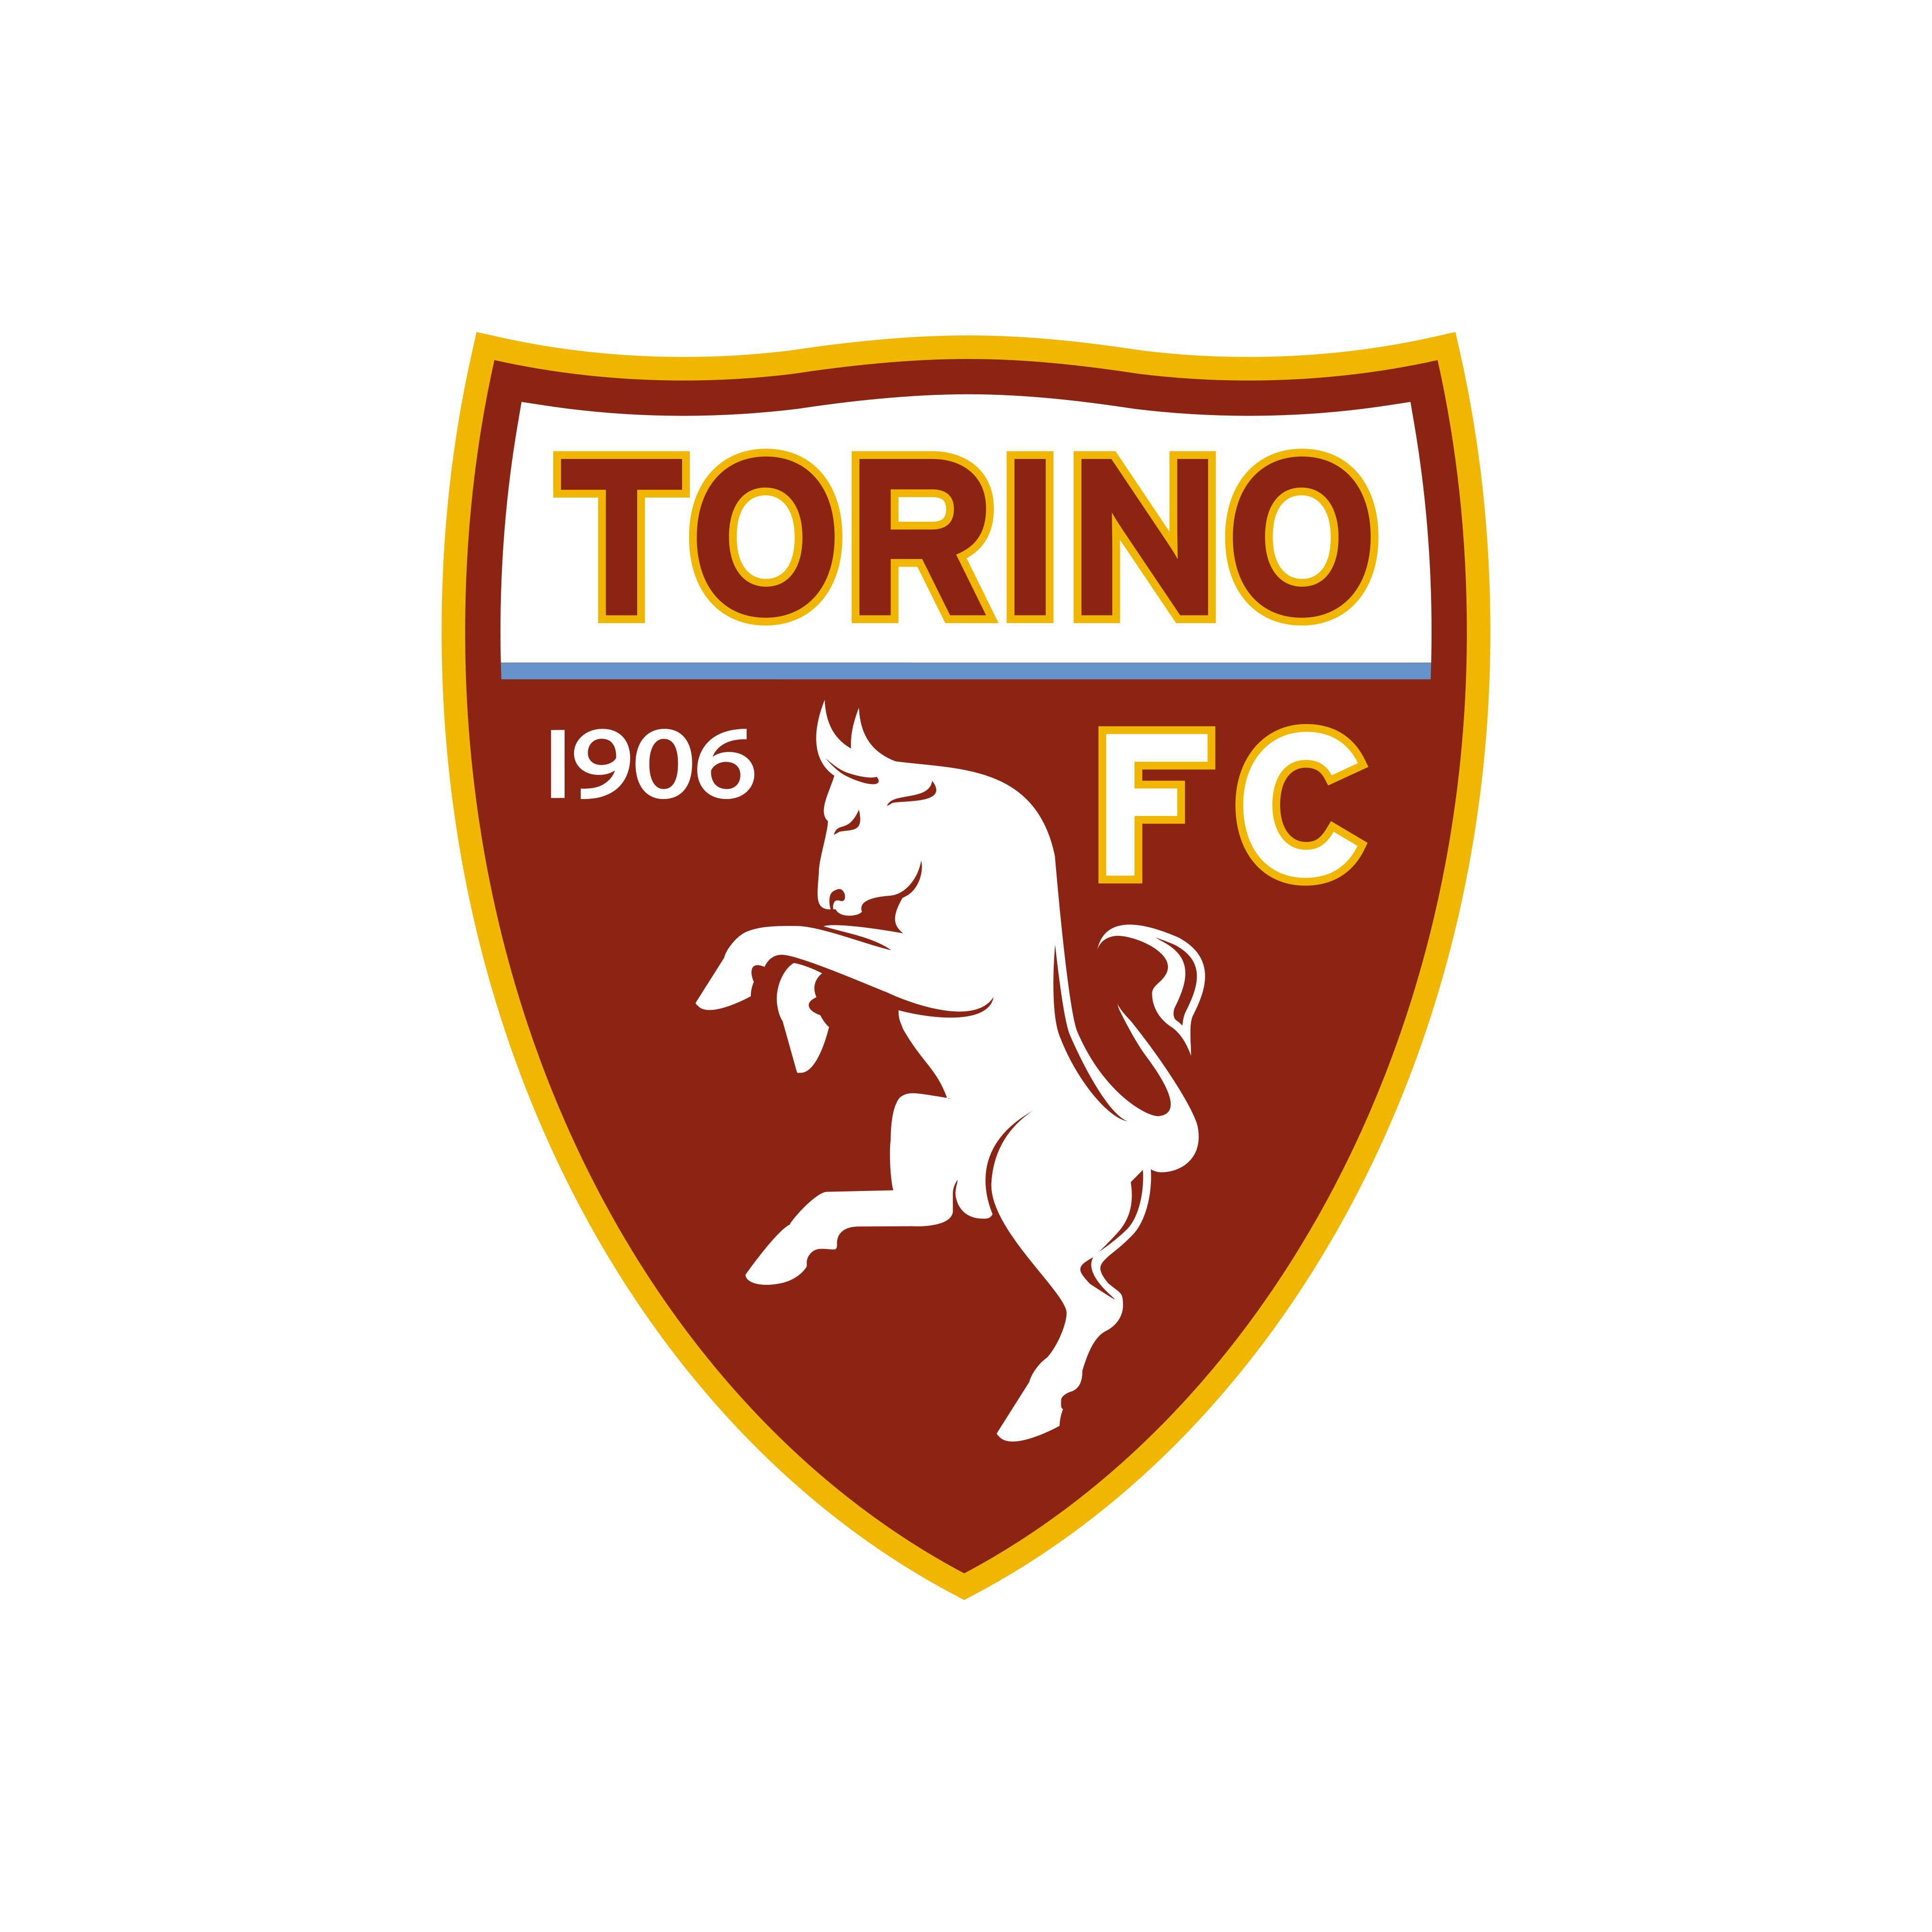 torino fc logo 0 - Torino FC Logo